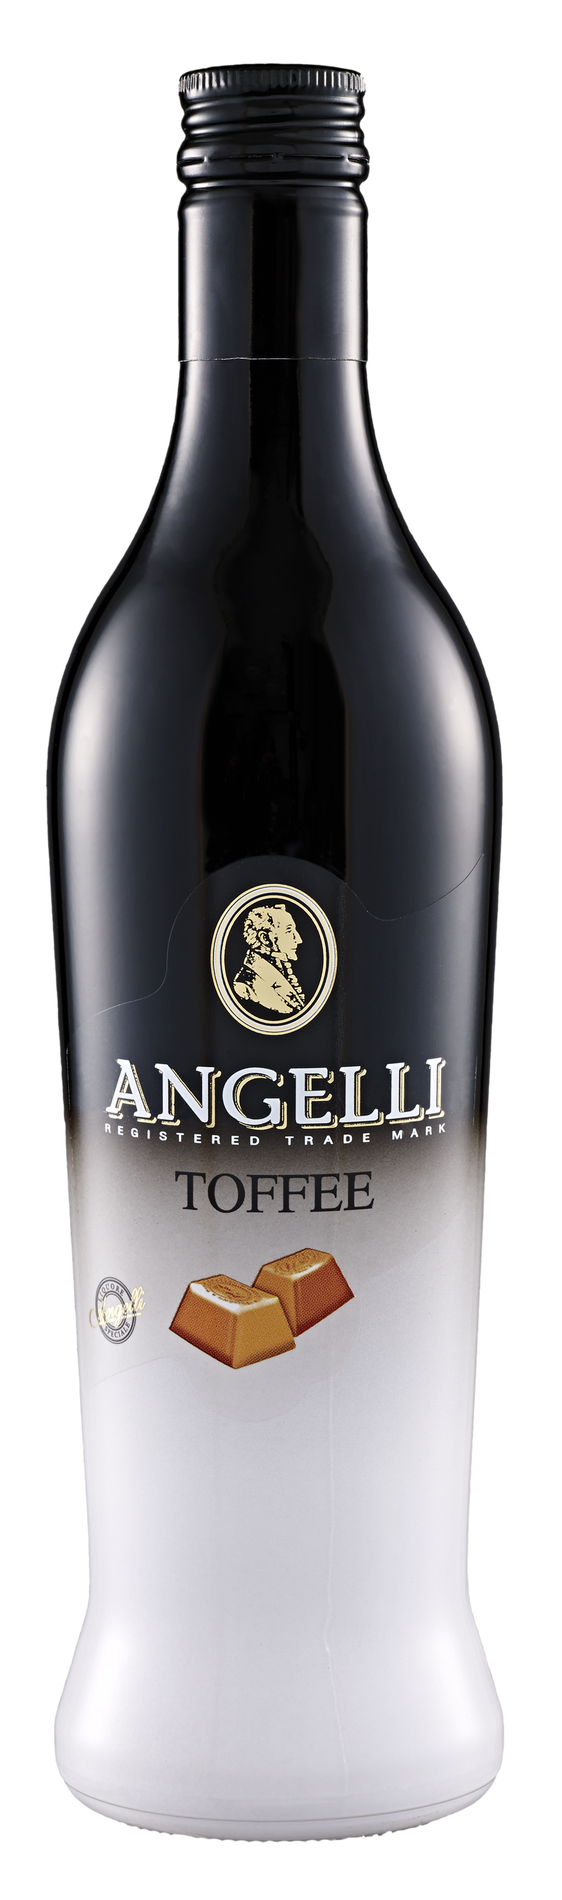 Angelli Toffee